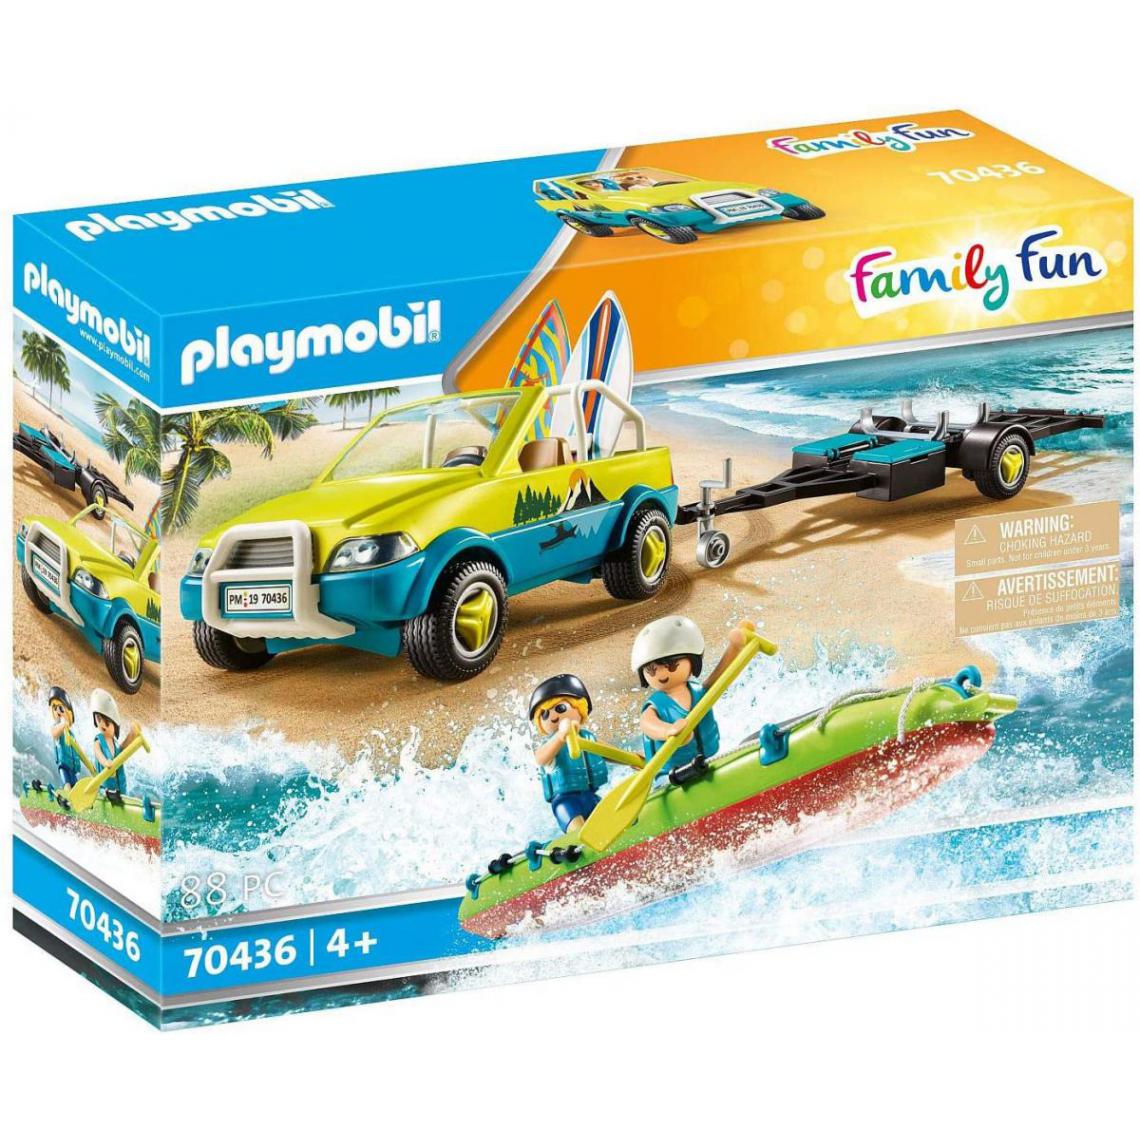 Playmobil - 70436 PLAYMO Beach Voiture avec canoë, Playmobil Family Fun - Playmobil